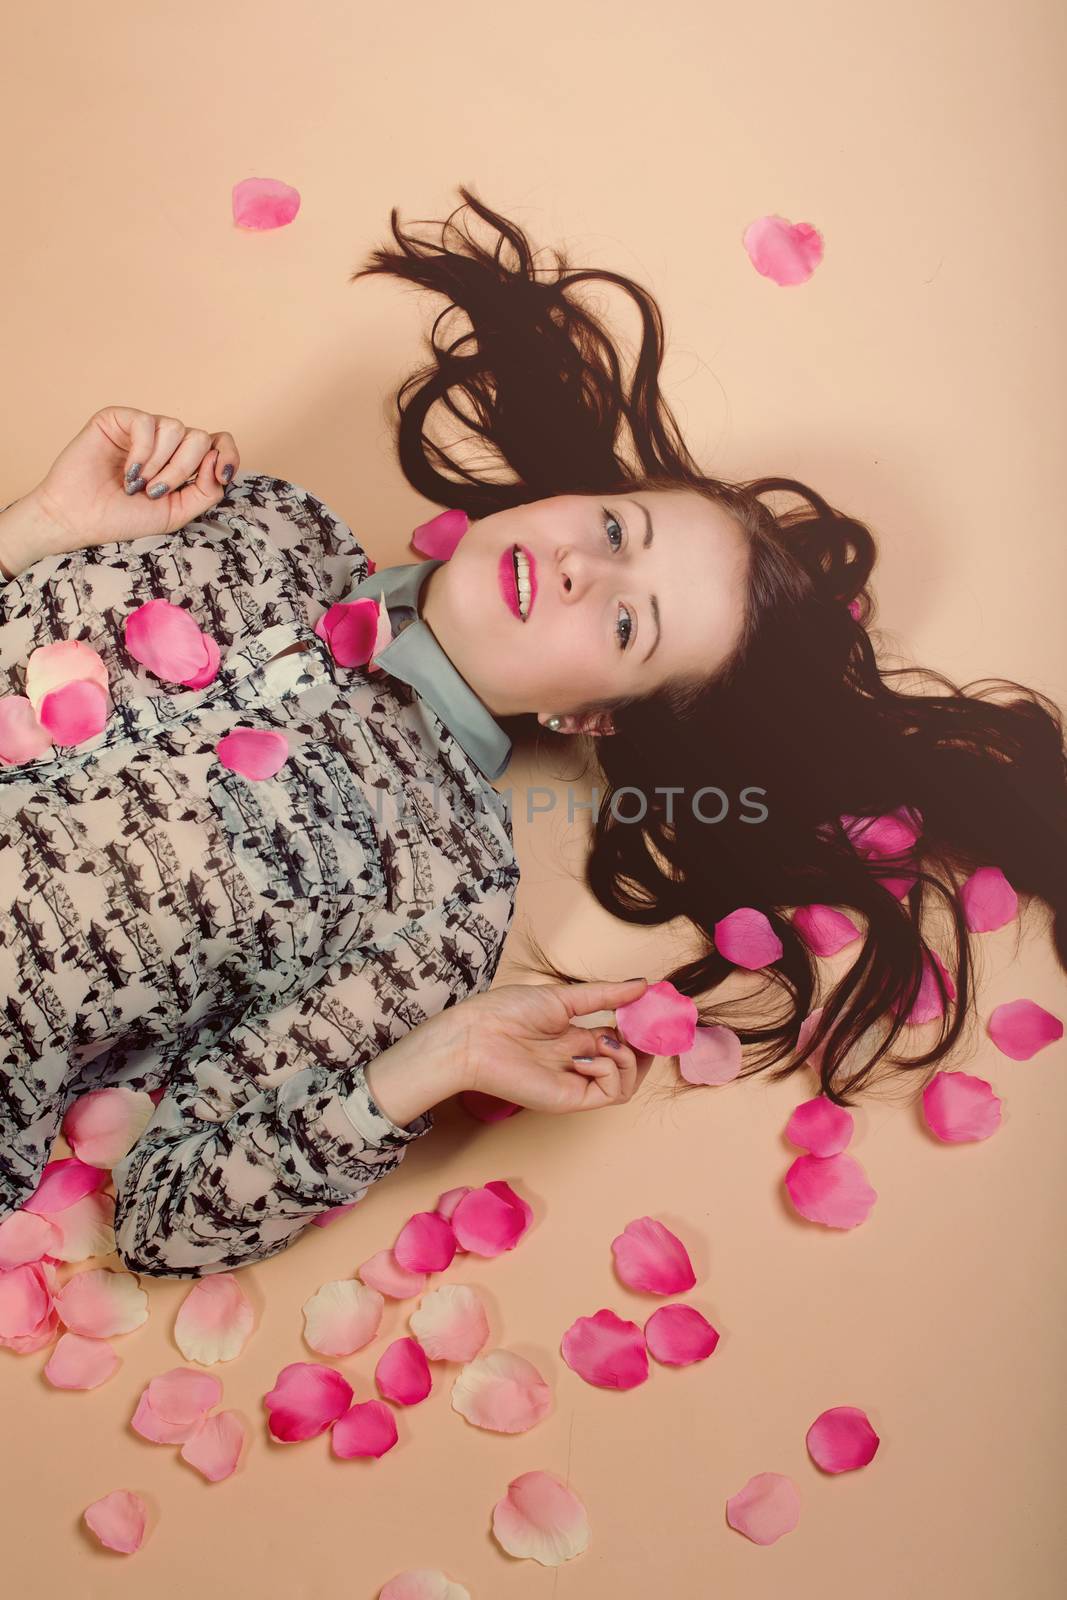 atractive brunette girl lying on beige background by artush